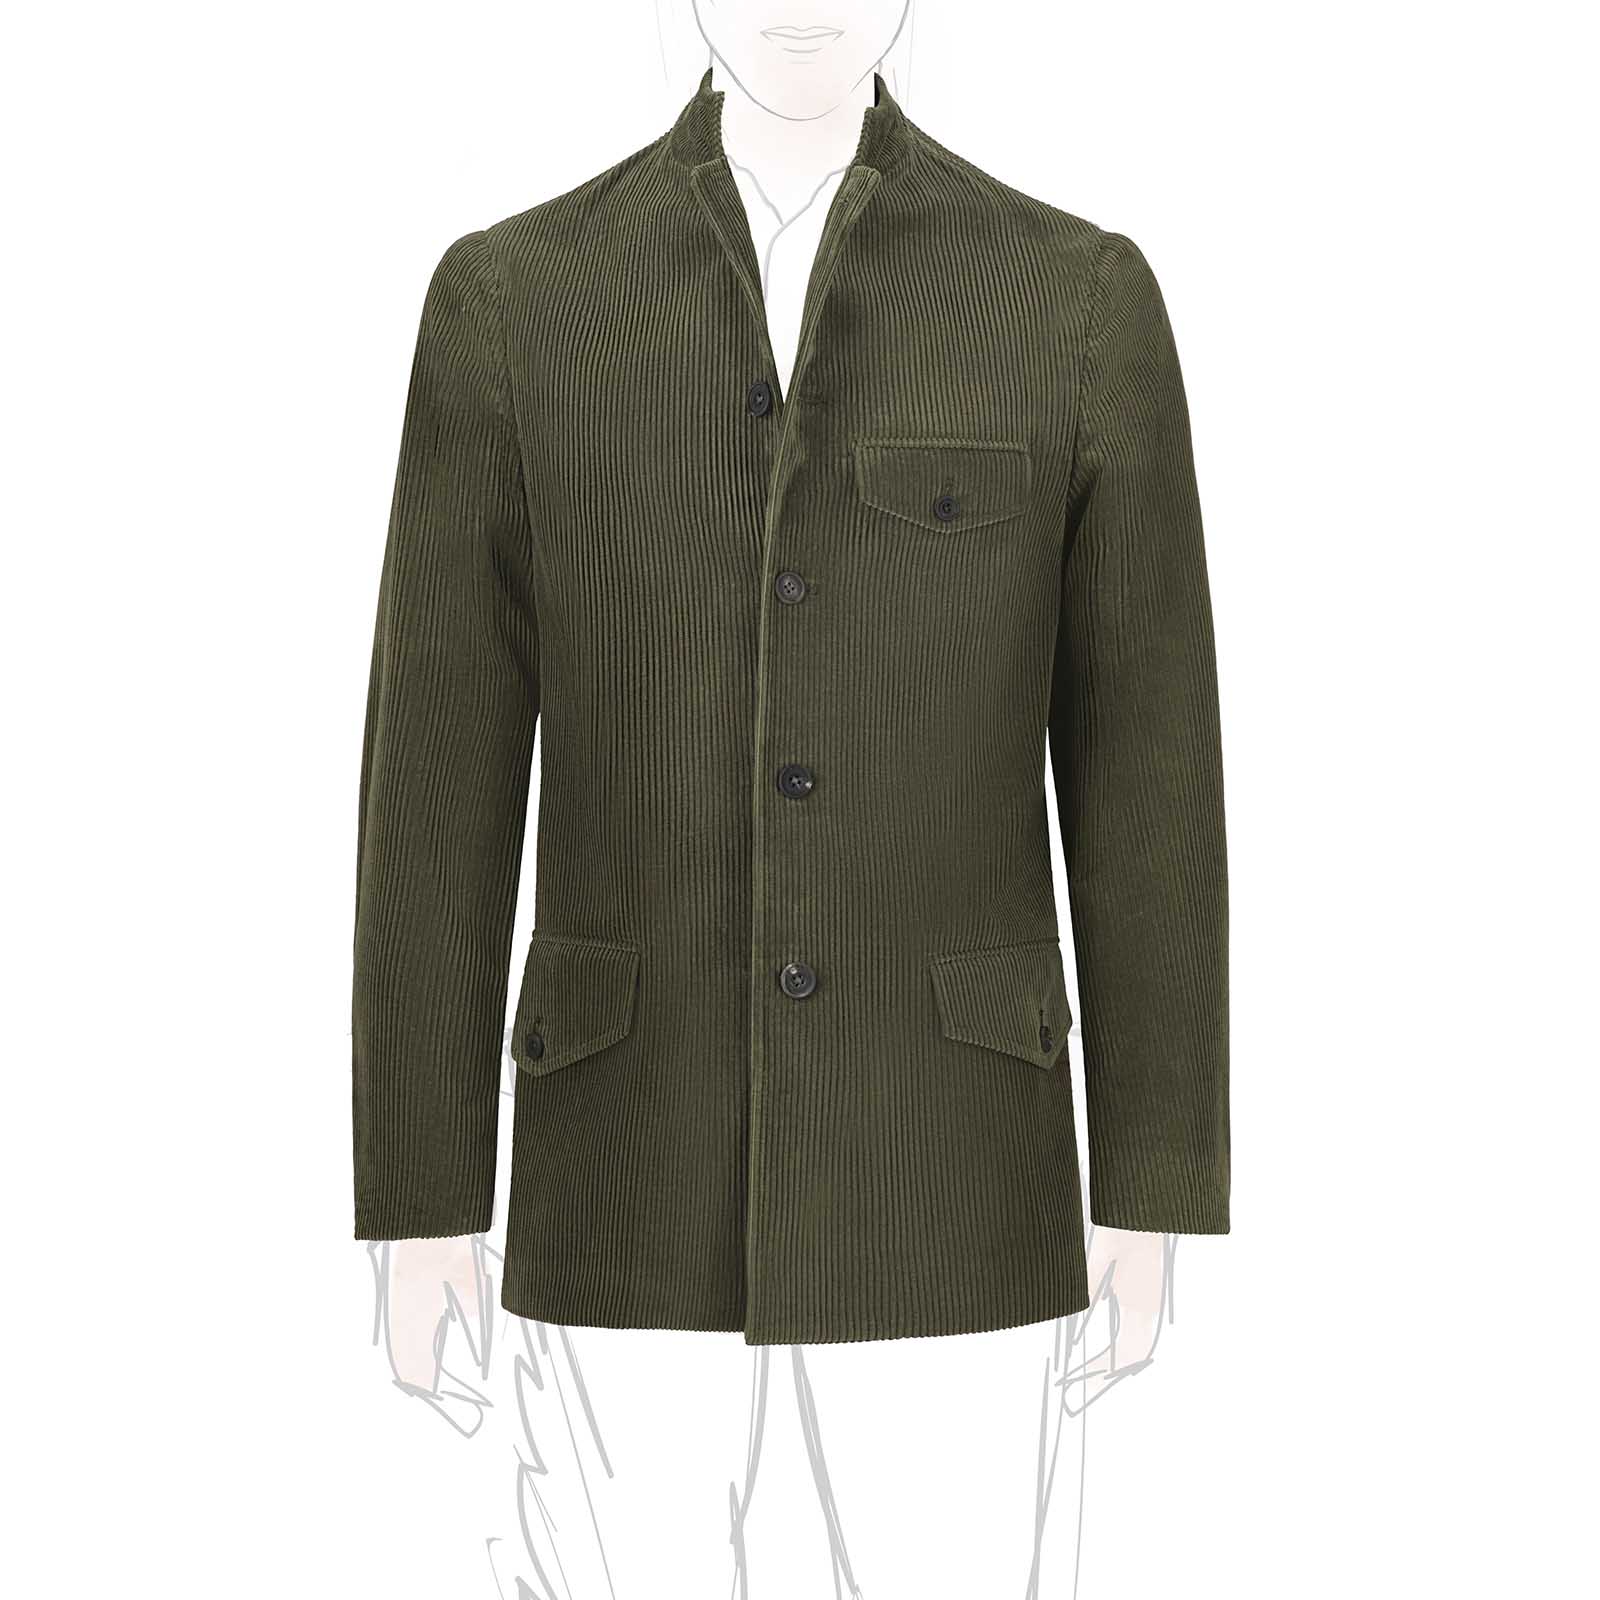 Mariano Rubinacci - Vintage archive military green corduroy Stefano jacket